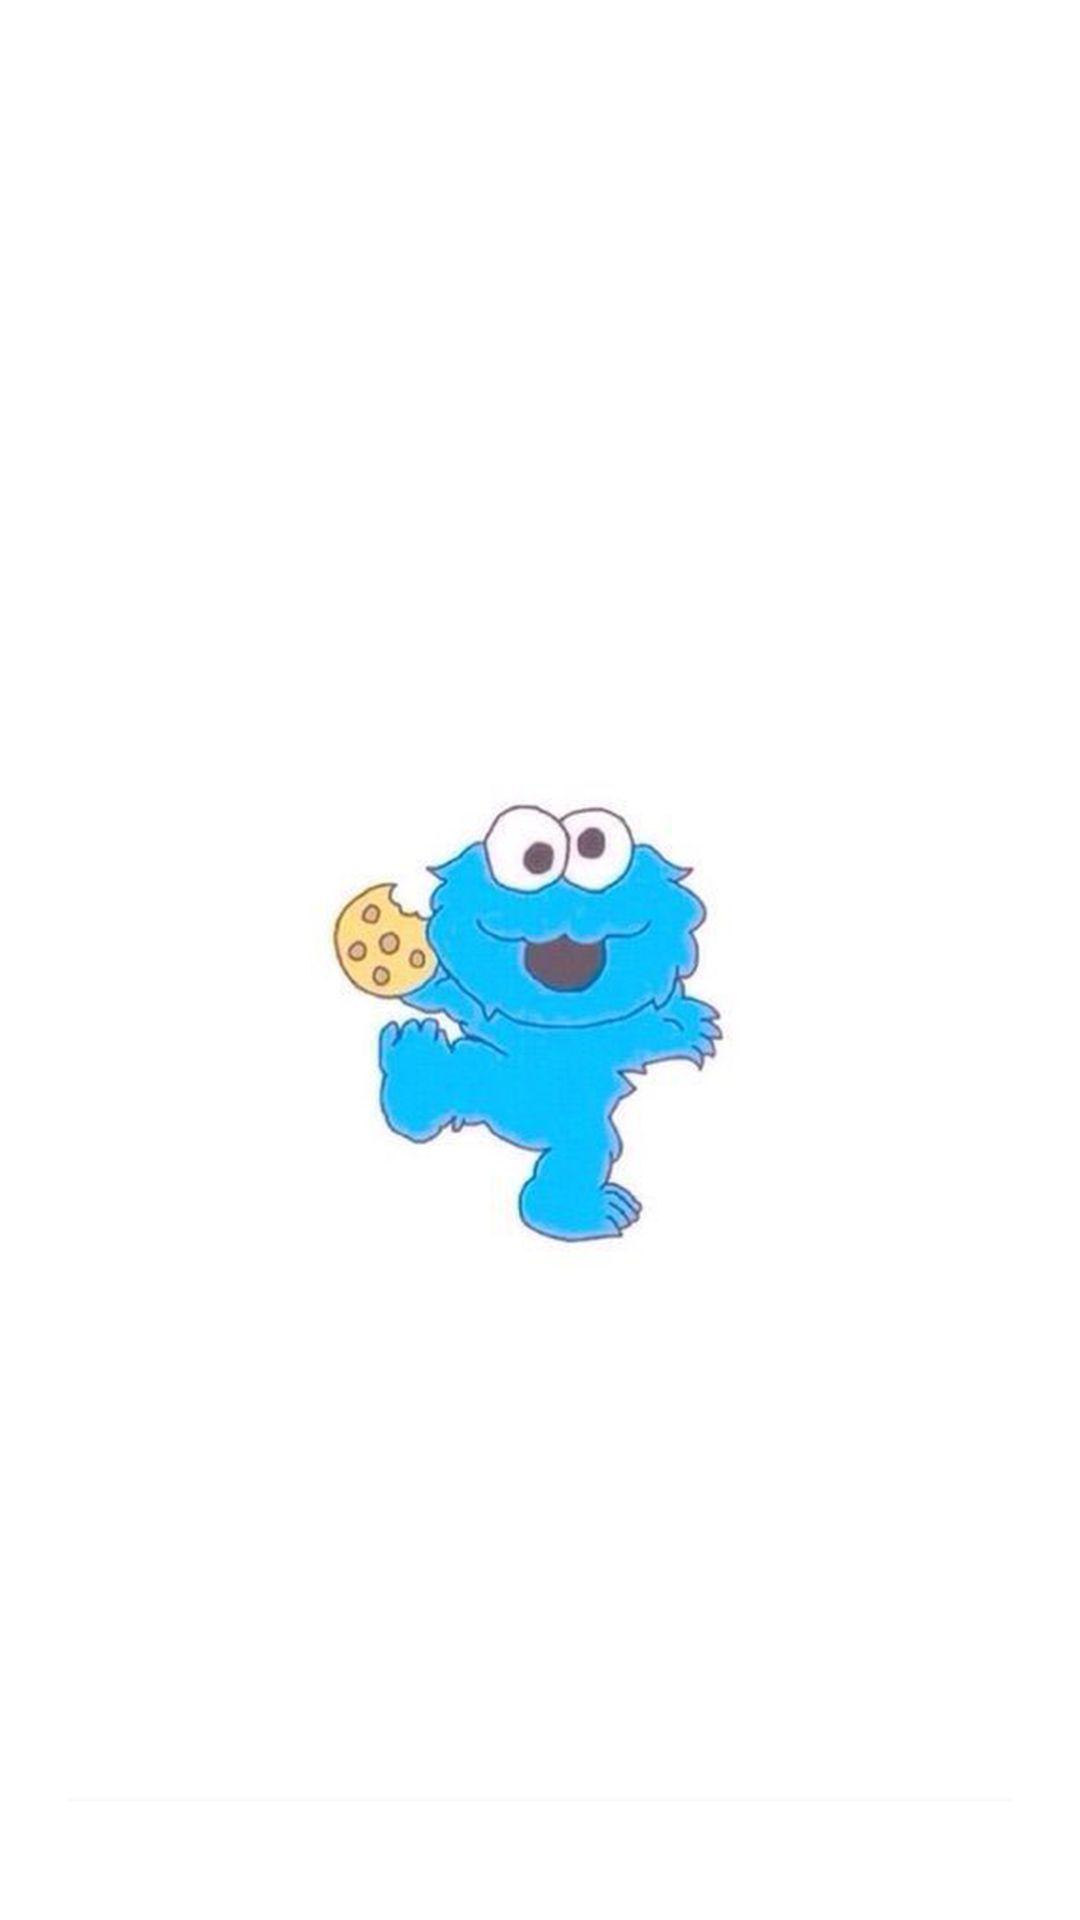 Baby Cookie Monster iPhone HD Wallpaper